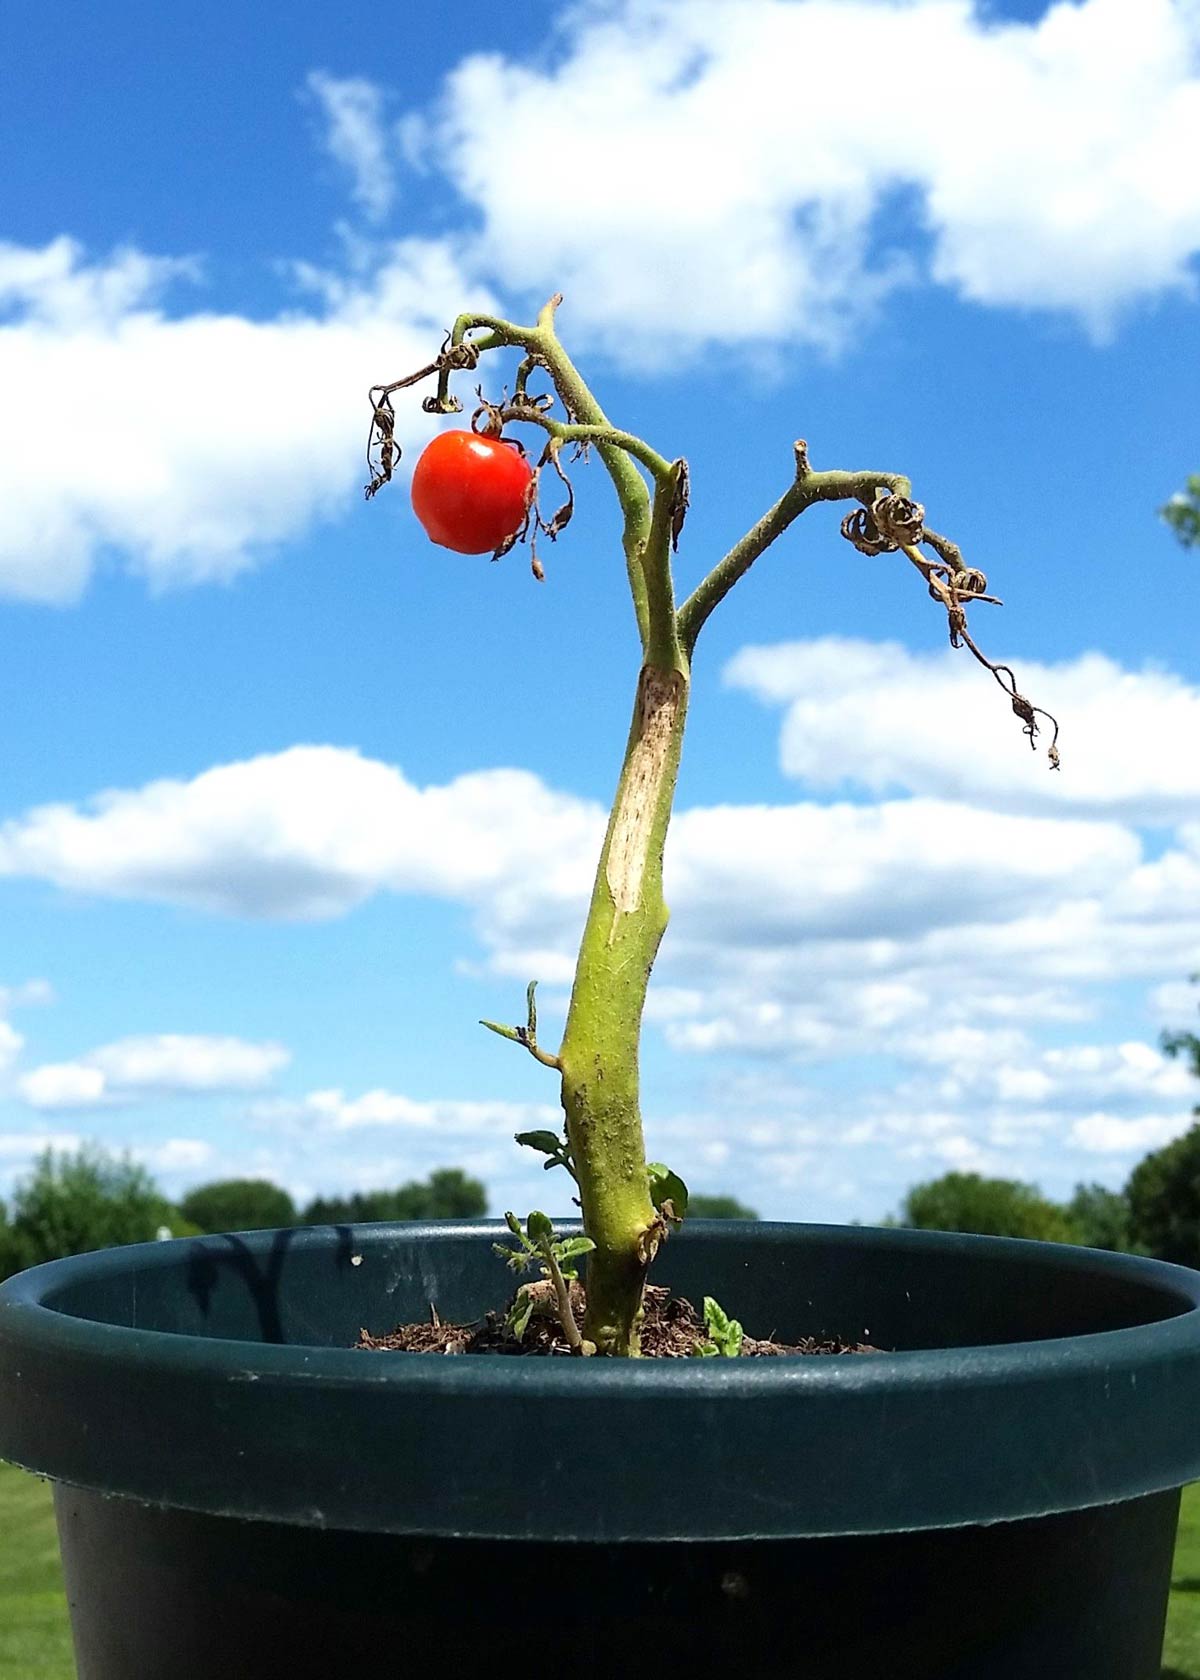 My small tomato plant looks like it belongs in a Tim Burton film